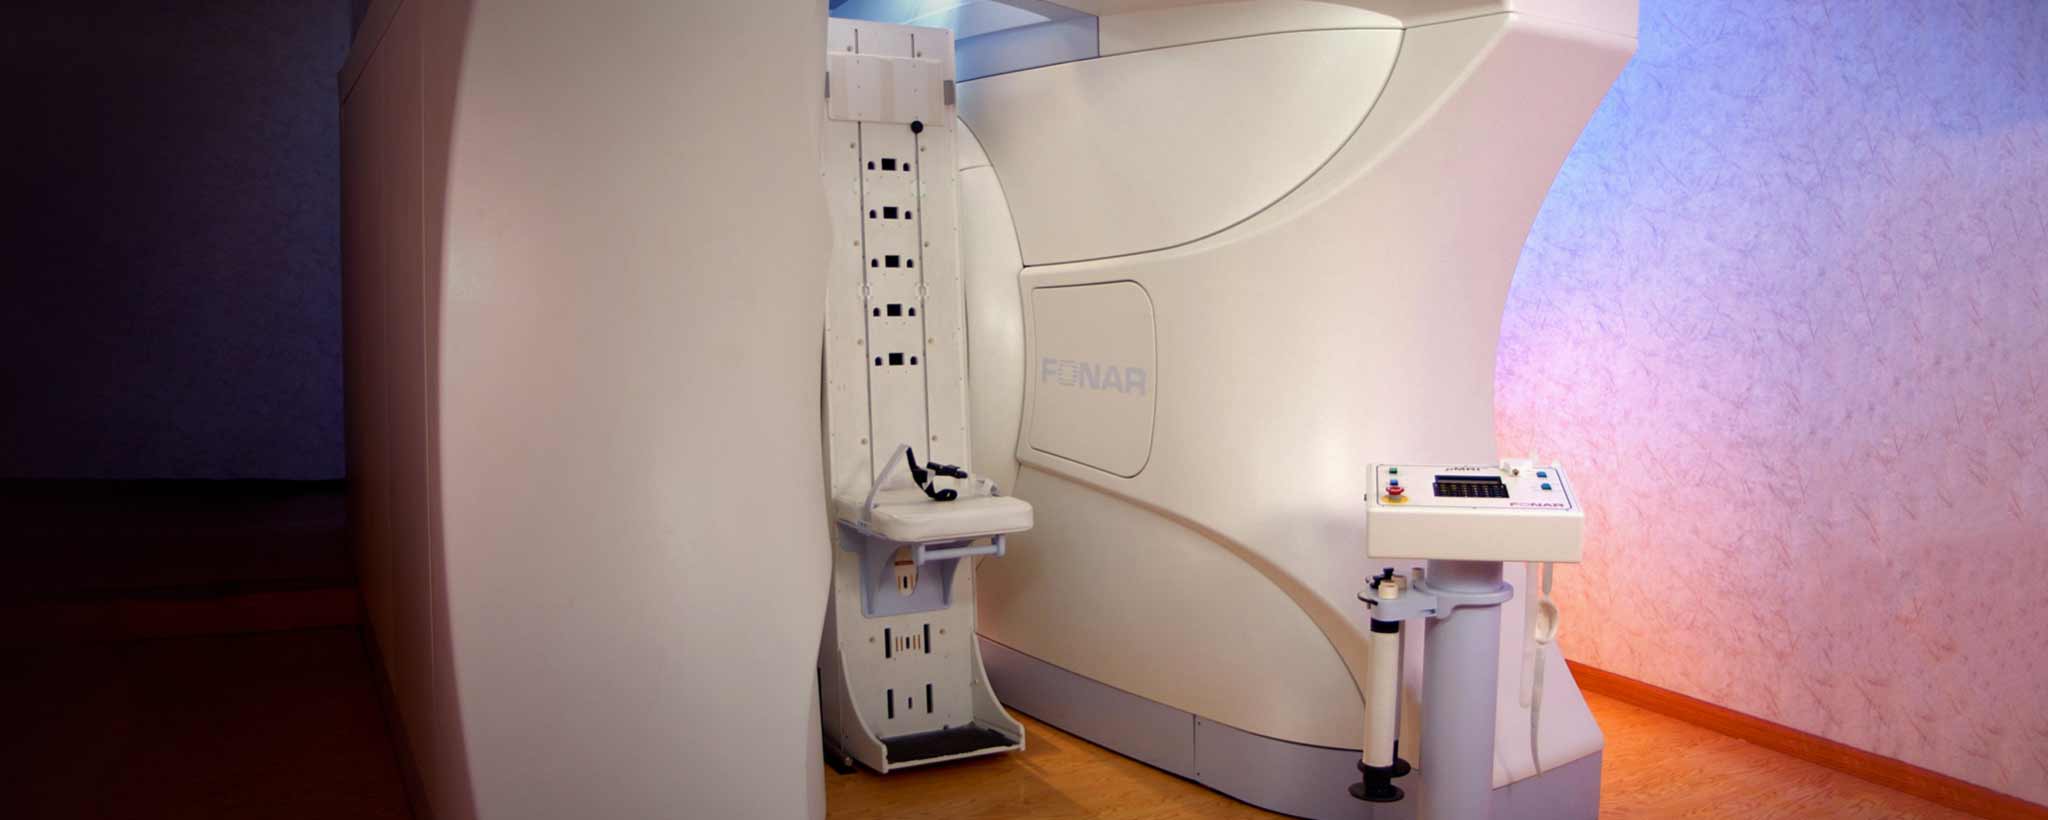 'Key Benefits of Dynamic MRI'